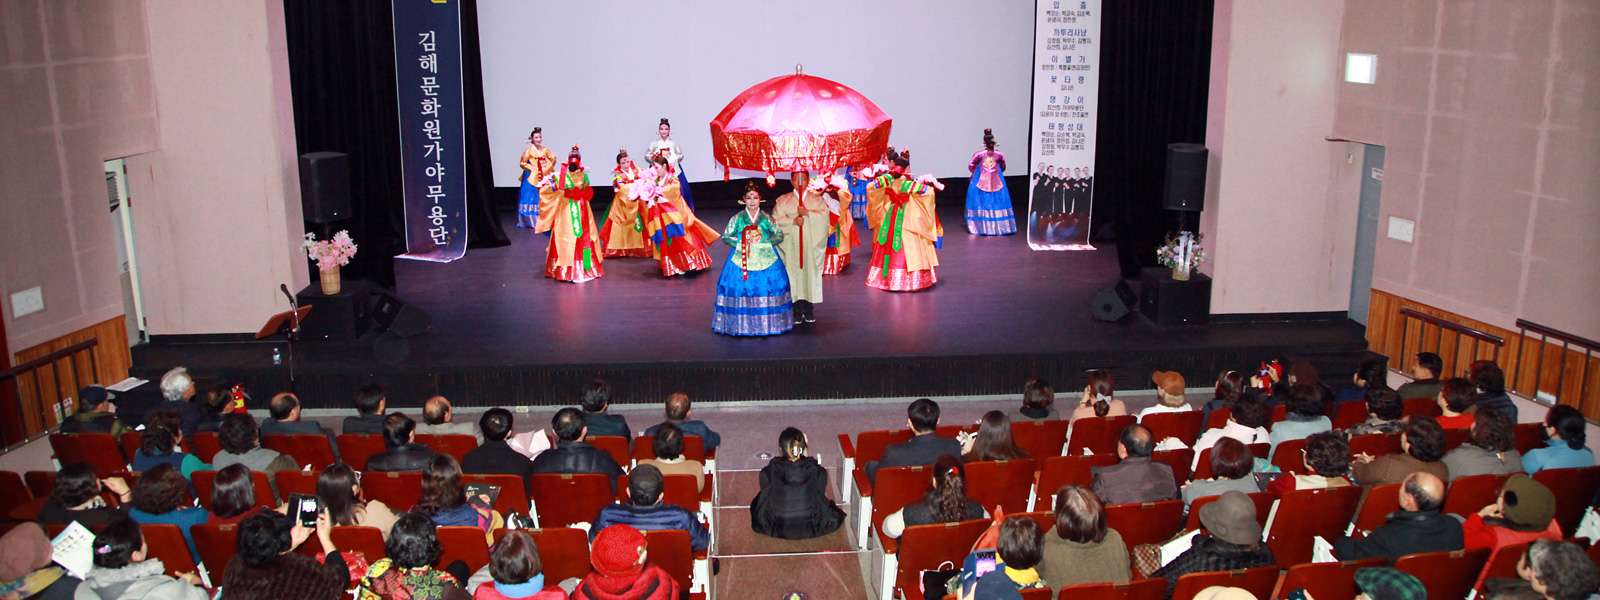 Gimhae Cultural Center, Gaya Folk Dance Organization